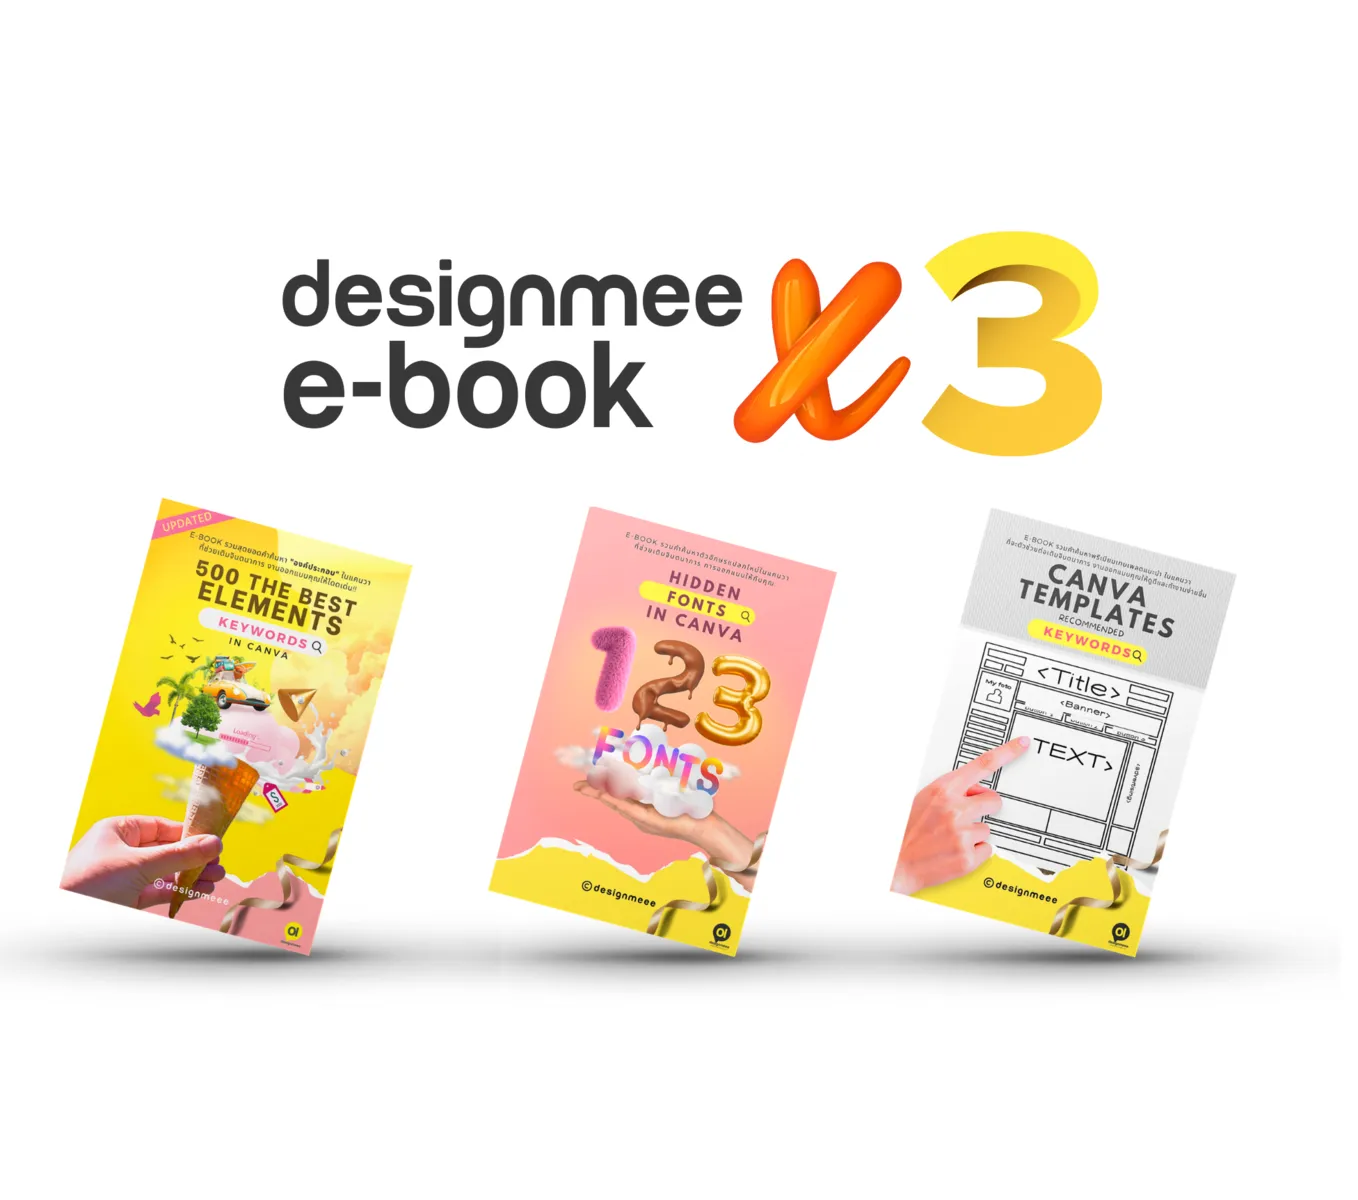 DESIGNMEEE E-BOOK series x3